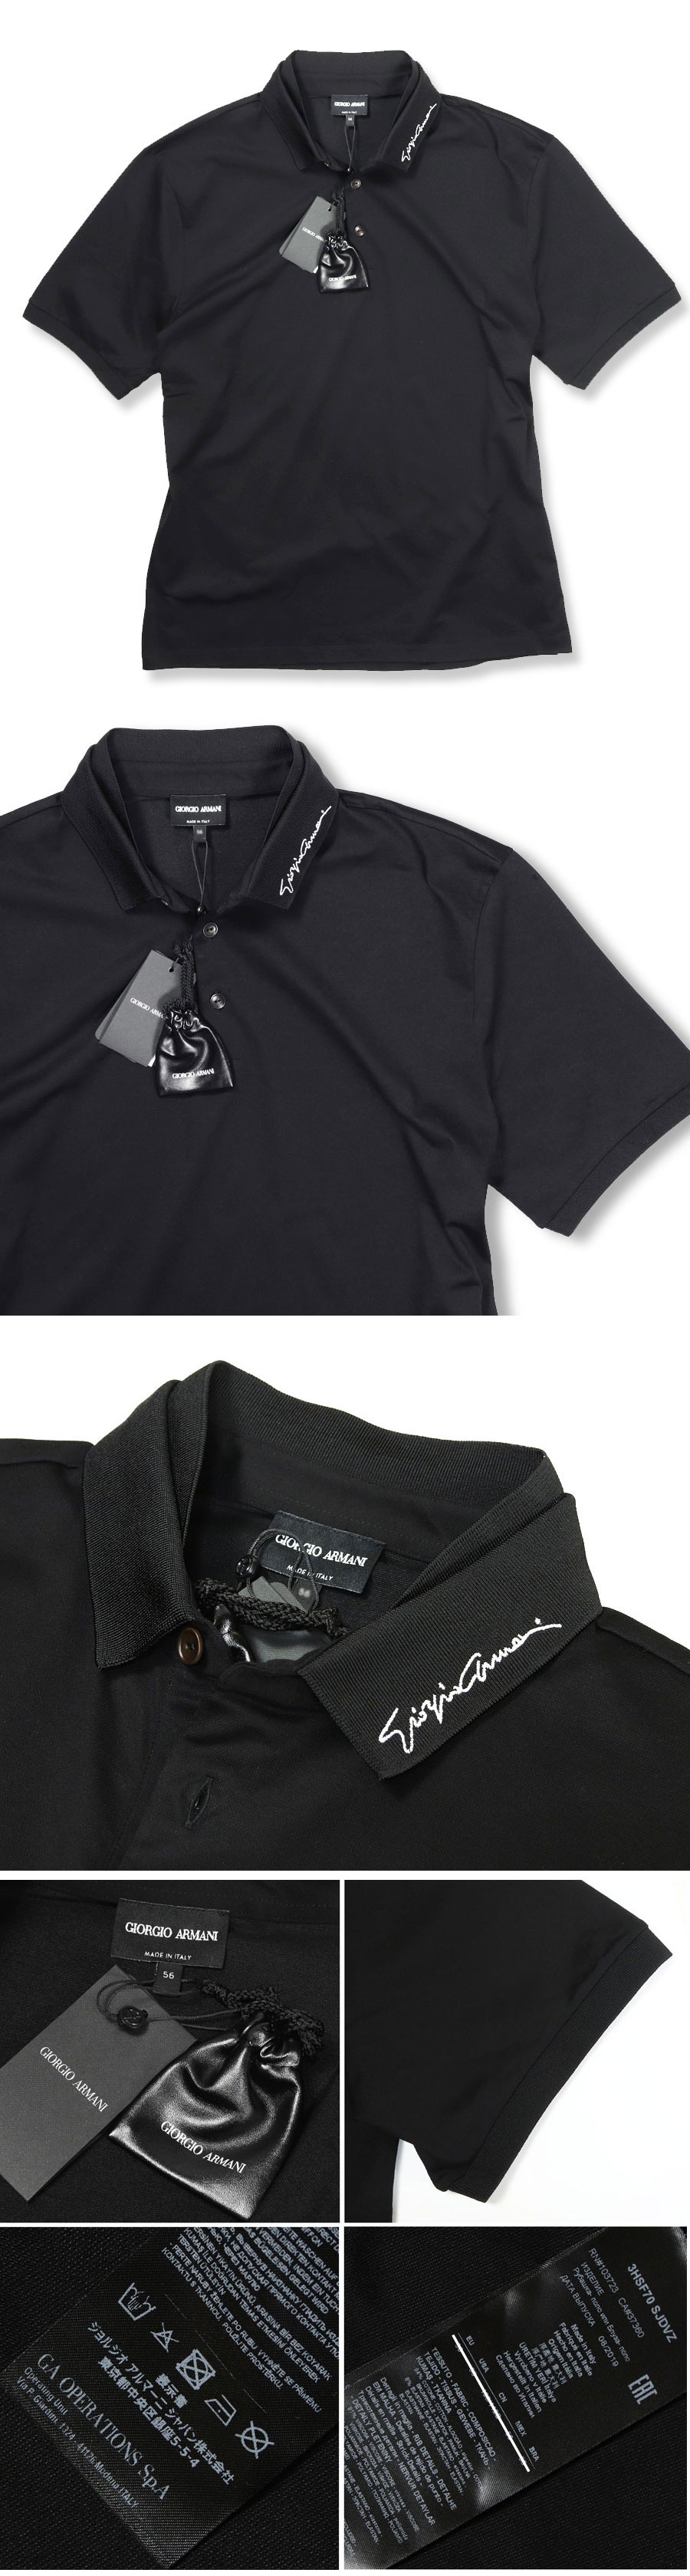 GIORGIO ARMANI ジョルジオアルマーニ ポロシャツ 黒 刺繍ロゴ - blog.knak.jp